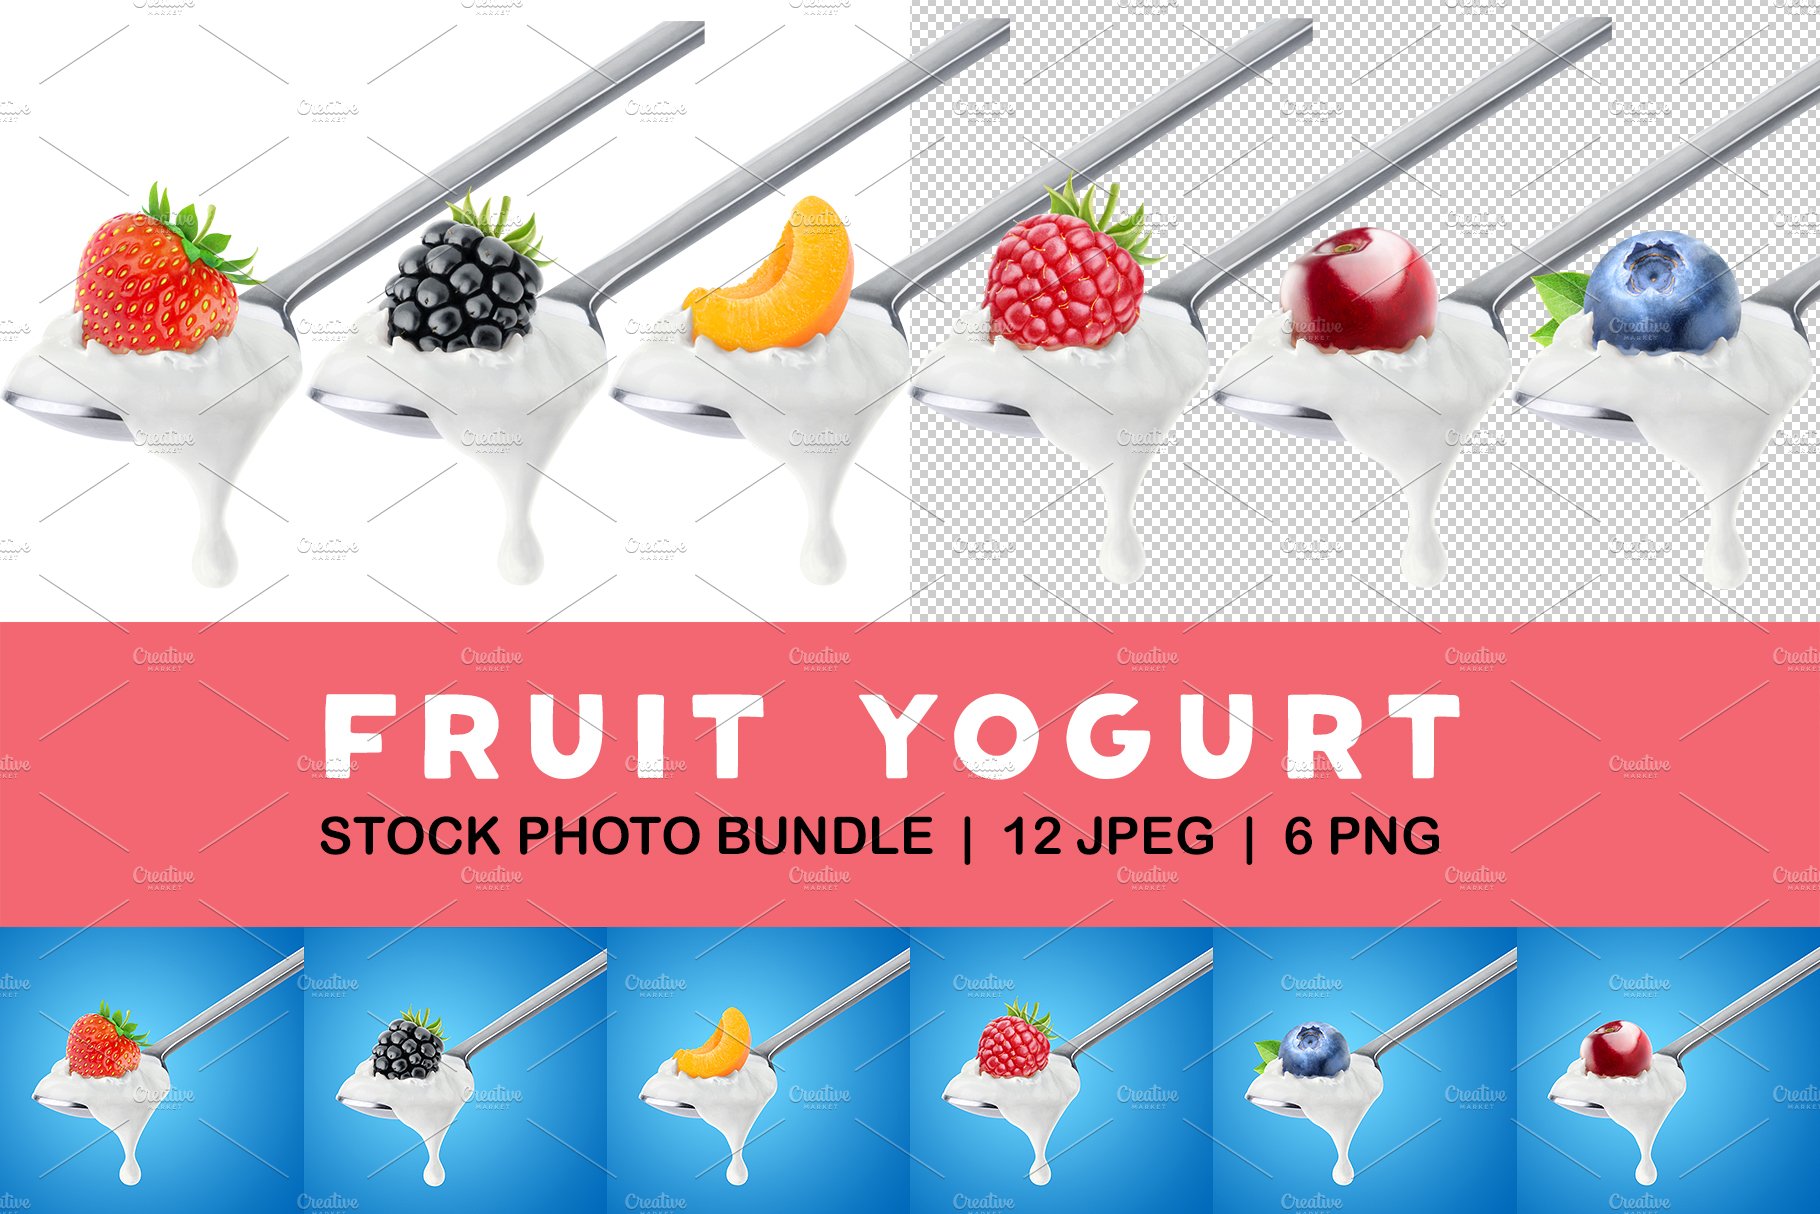 Fruit yogurt on spoons cover image.